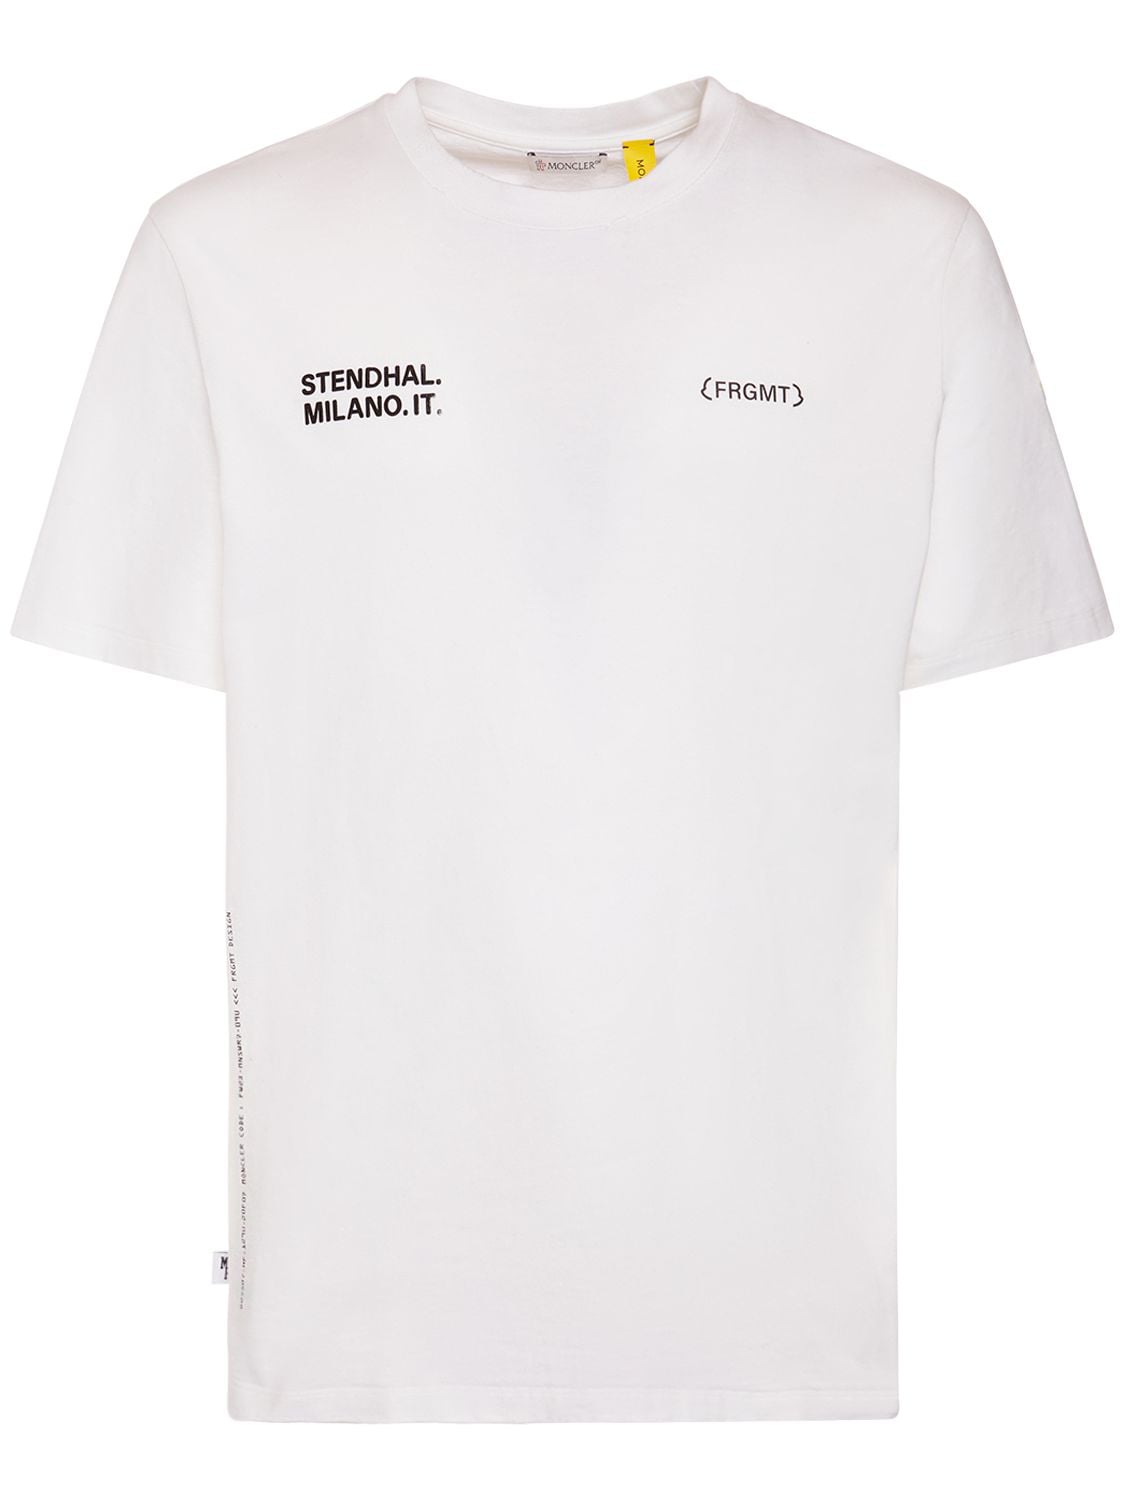 Moncler Genius Moncler X Frgmt Cotton Jersey T-shirt In Bright White